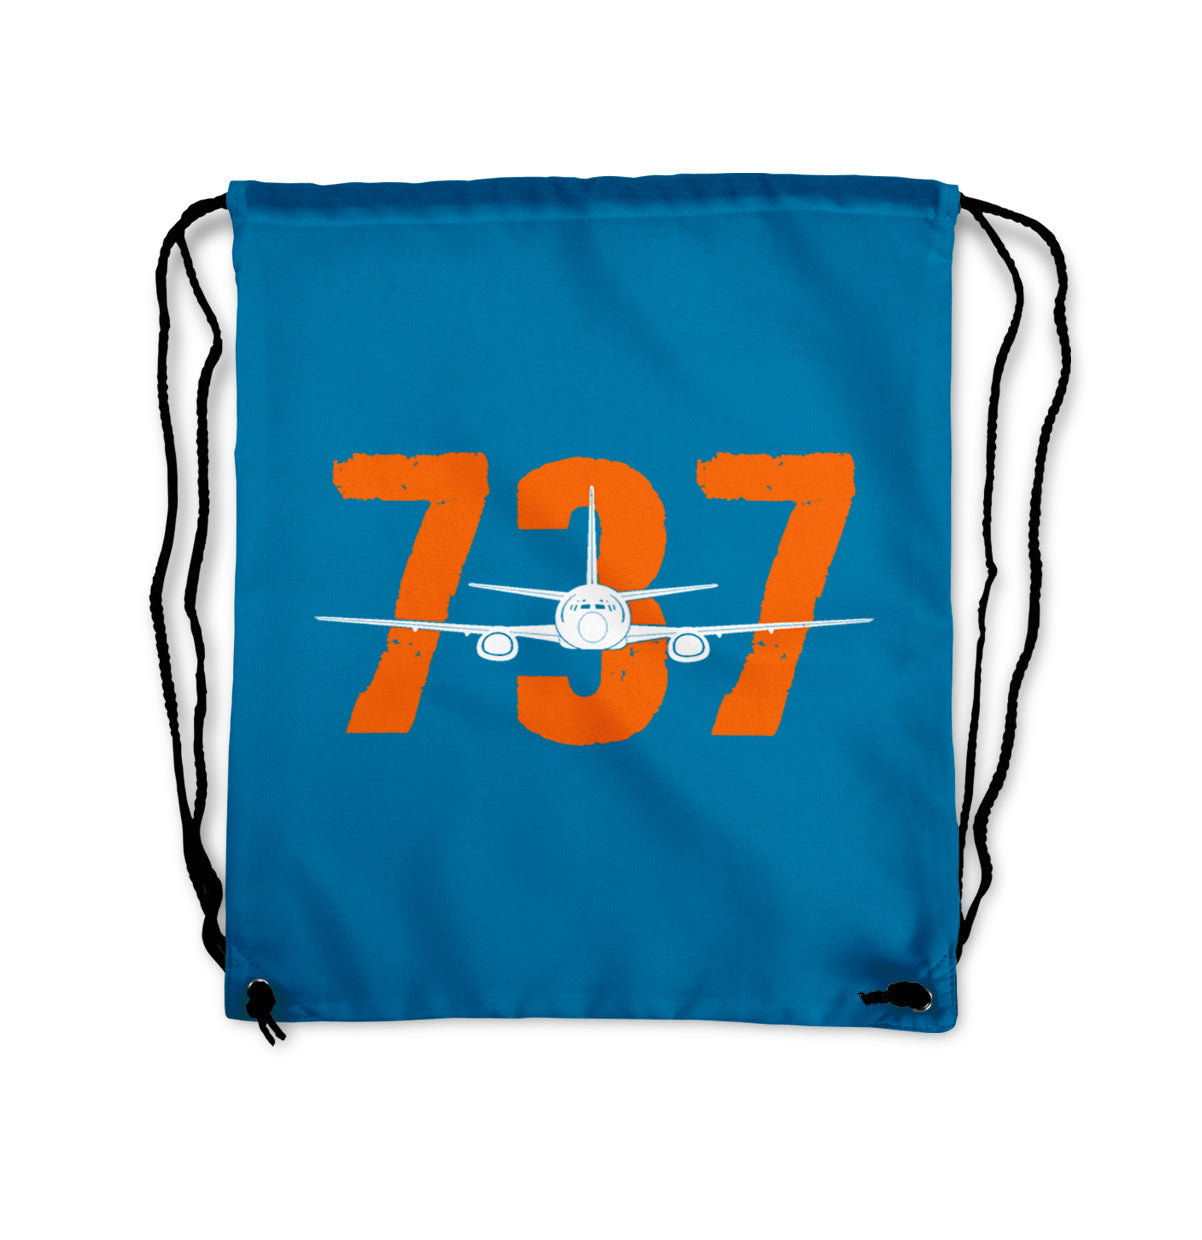 Boeing 737 Designed Drawstring Bags